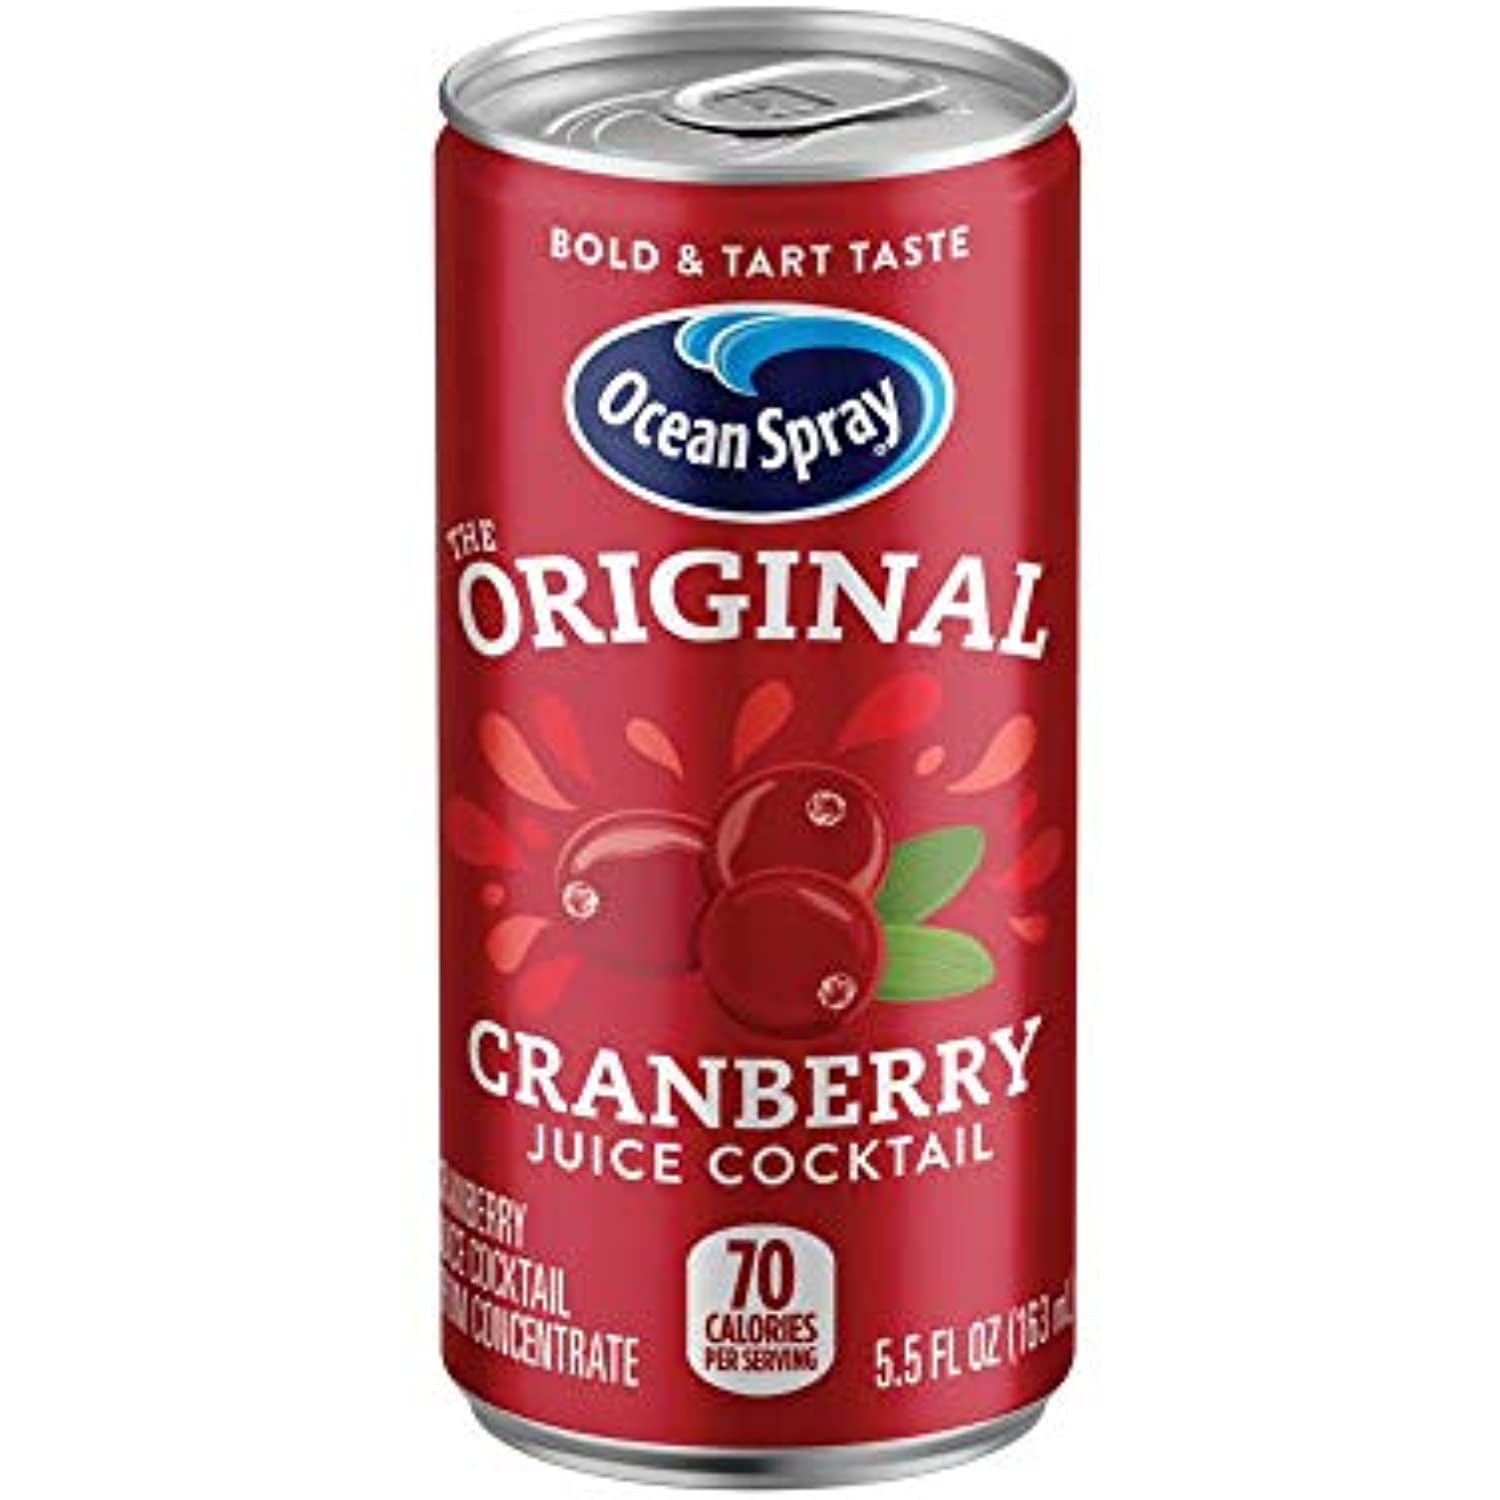 24” Water Resist Mini Berry Spray - Cranberry Christmas Sprays